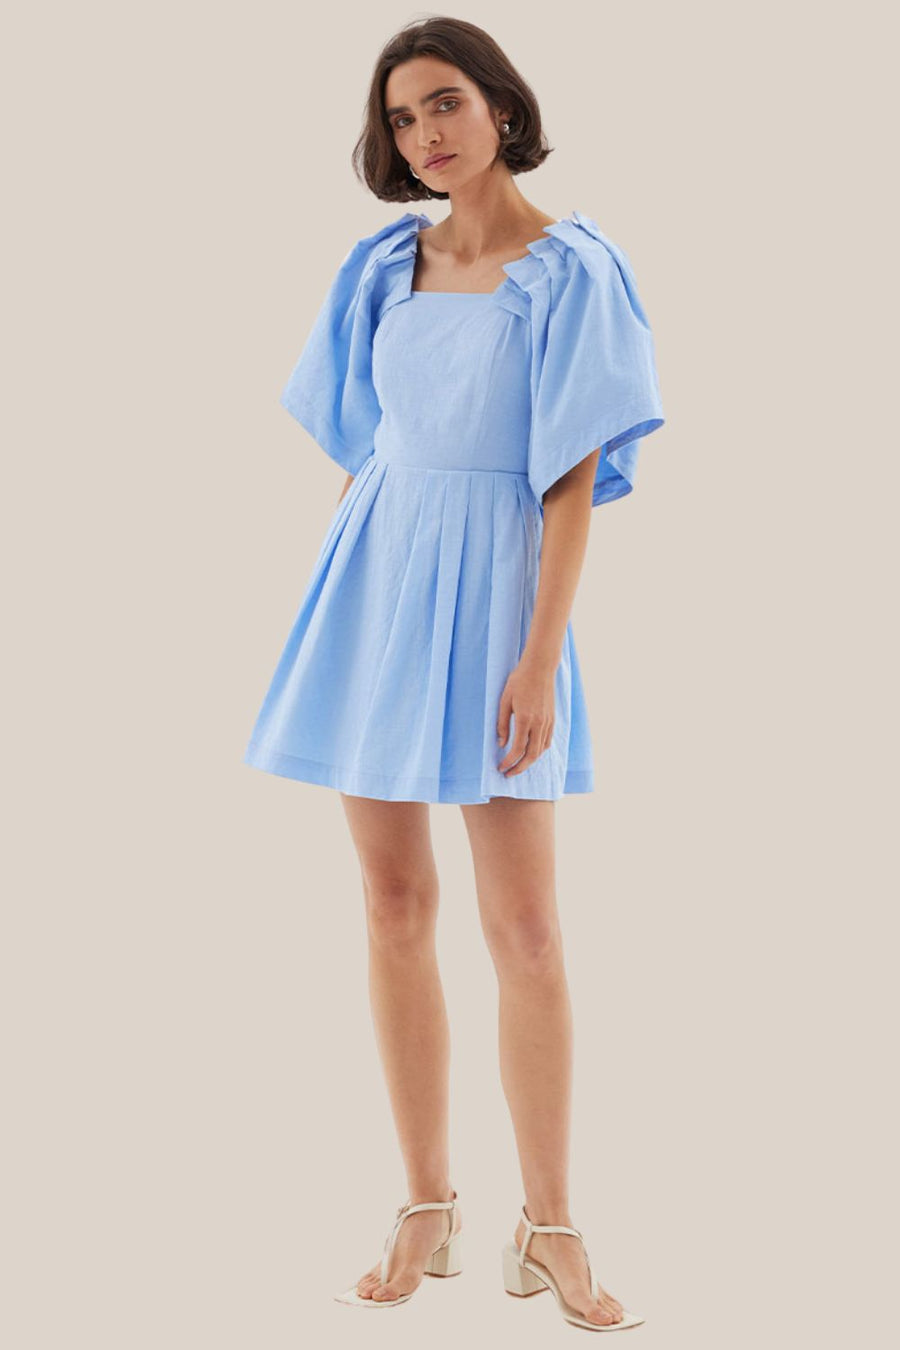 Sovere - Origami Mini Dress in Serene Blue